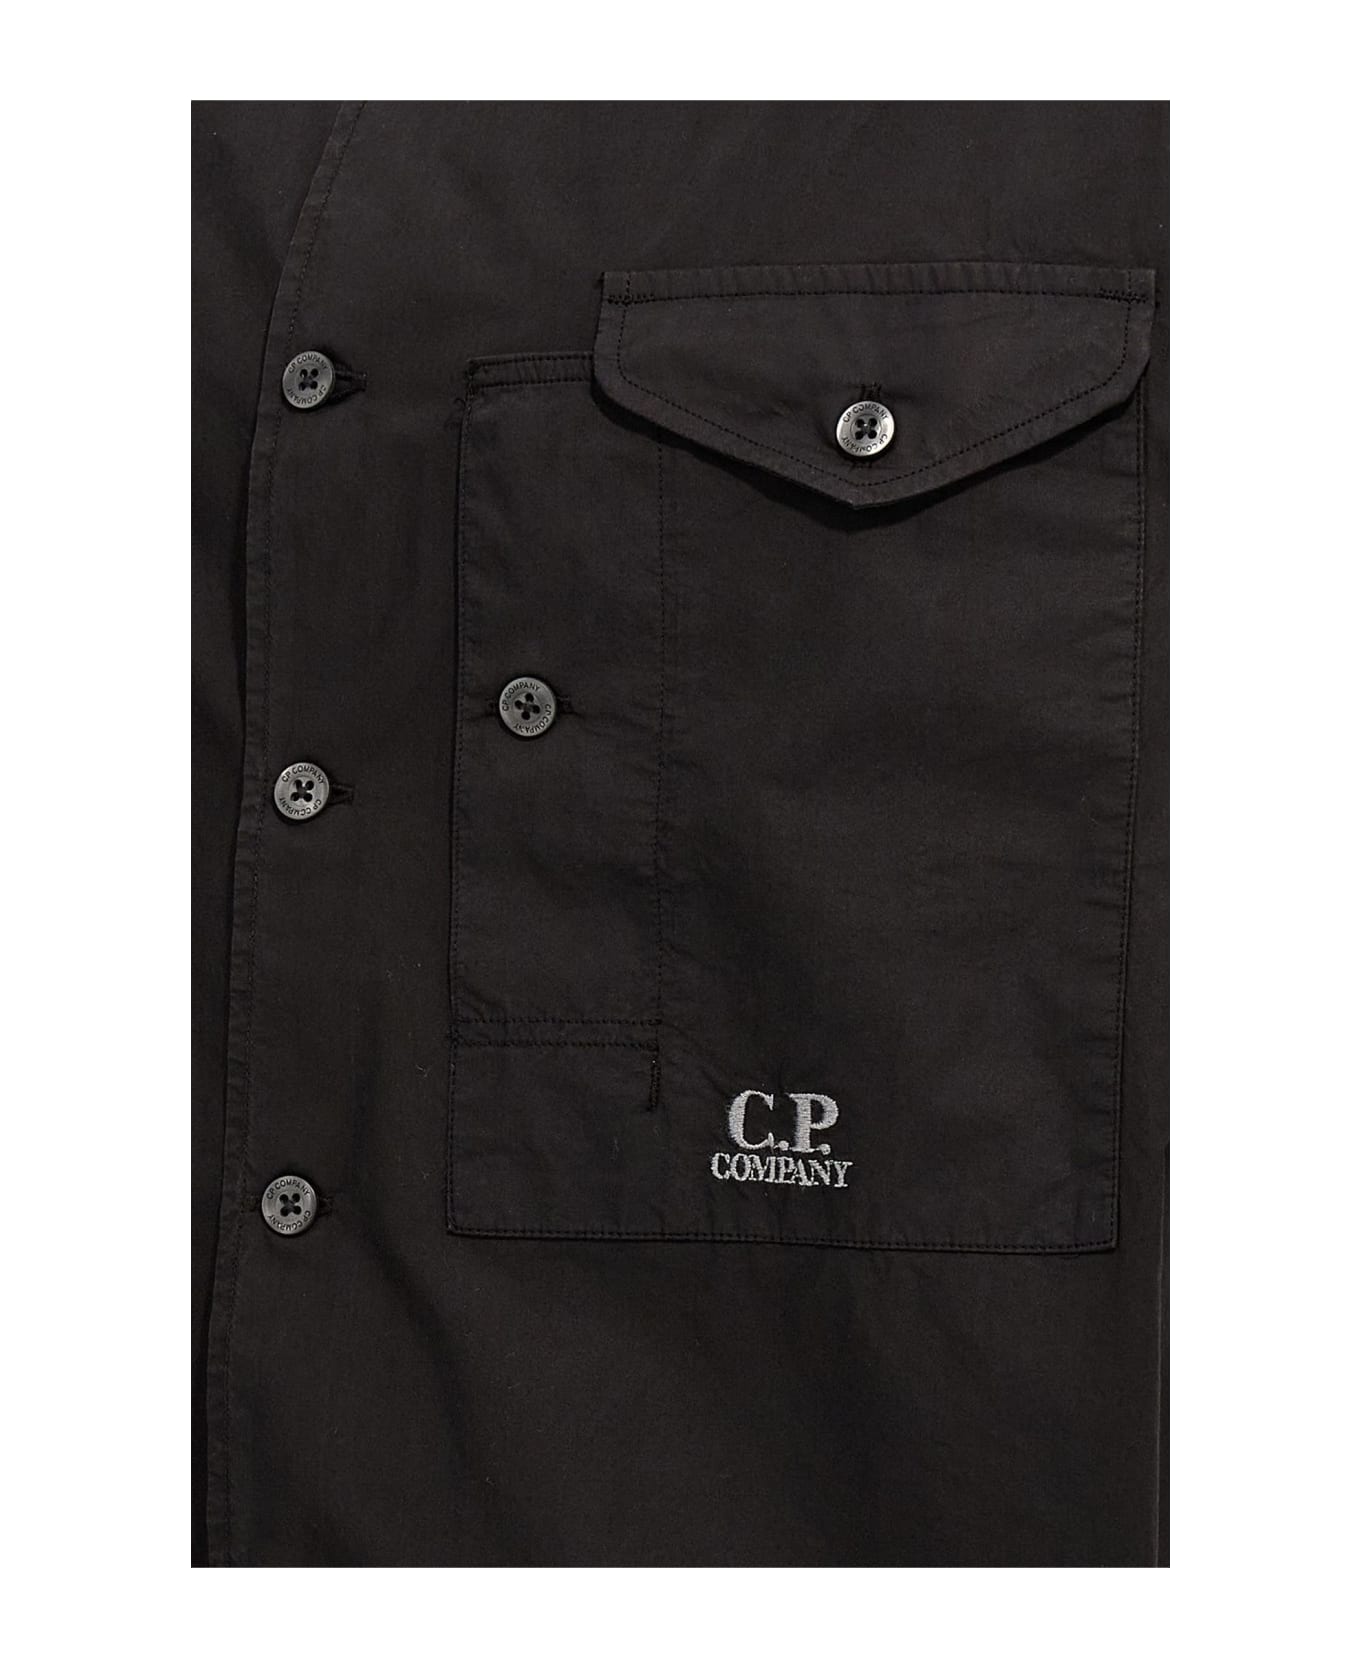 C.P. Company C.p.company Shirts Black - Black